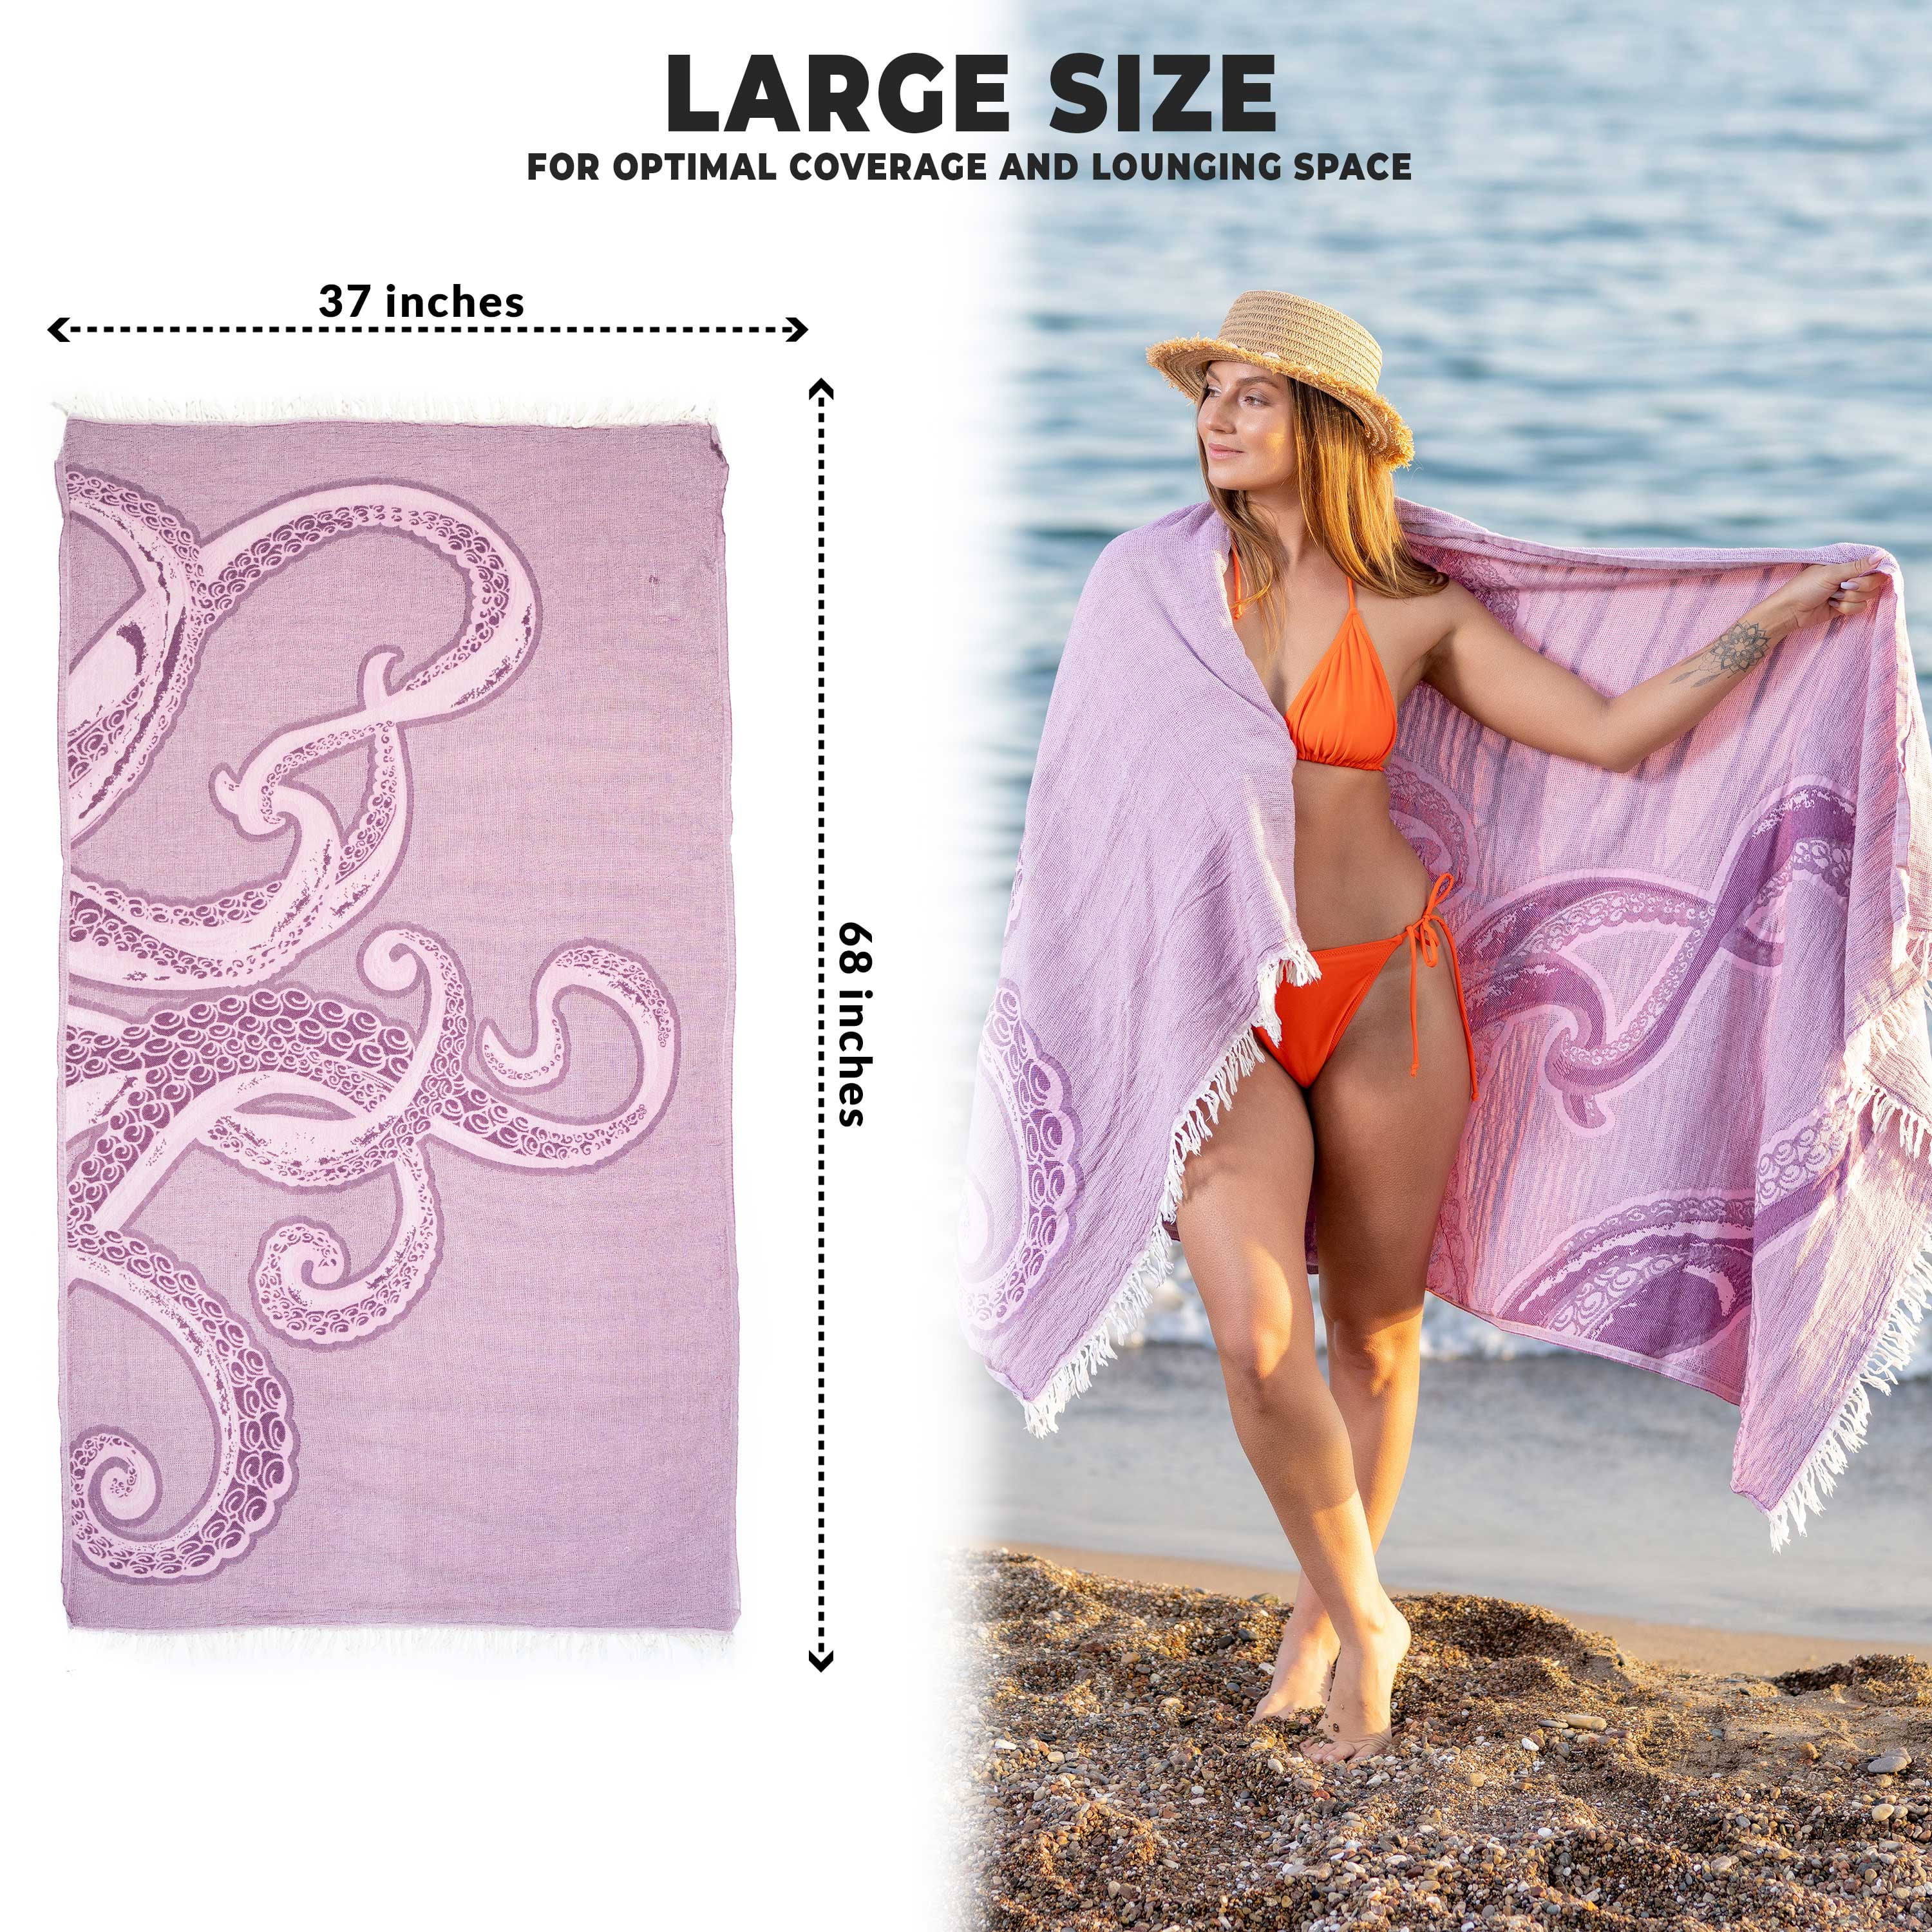 Hencely Sand Free Turkish Beach Towel Colors - Set of 6